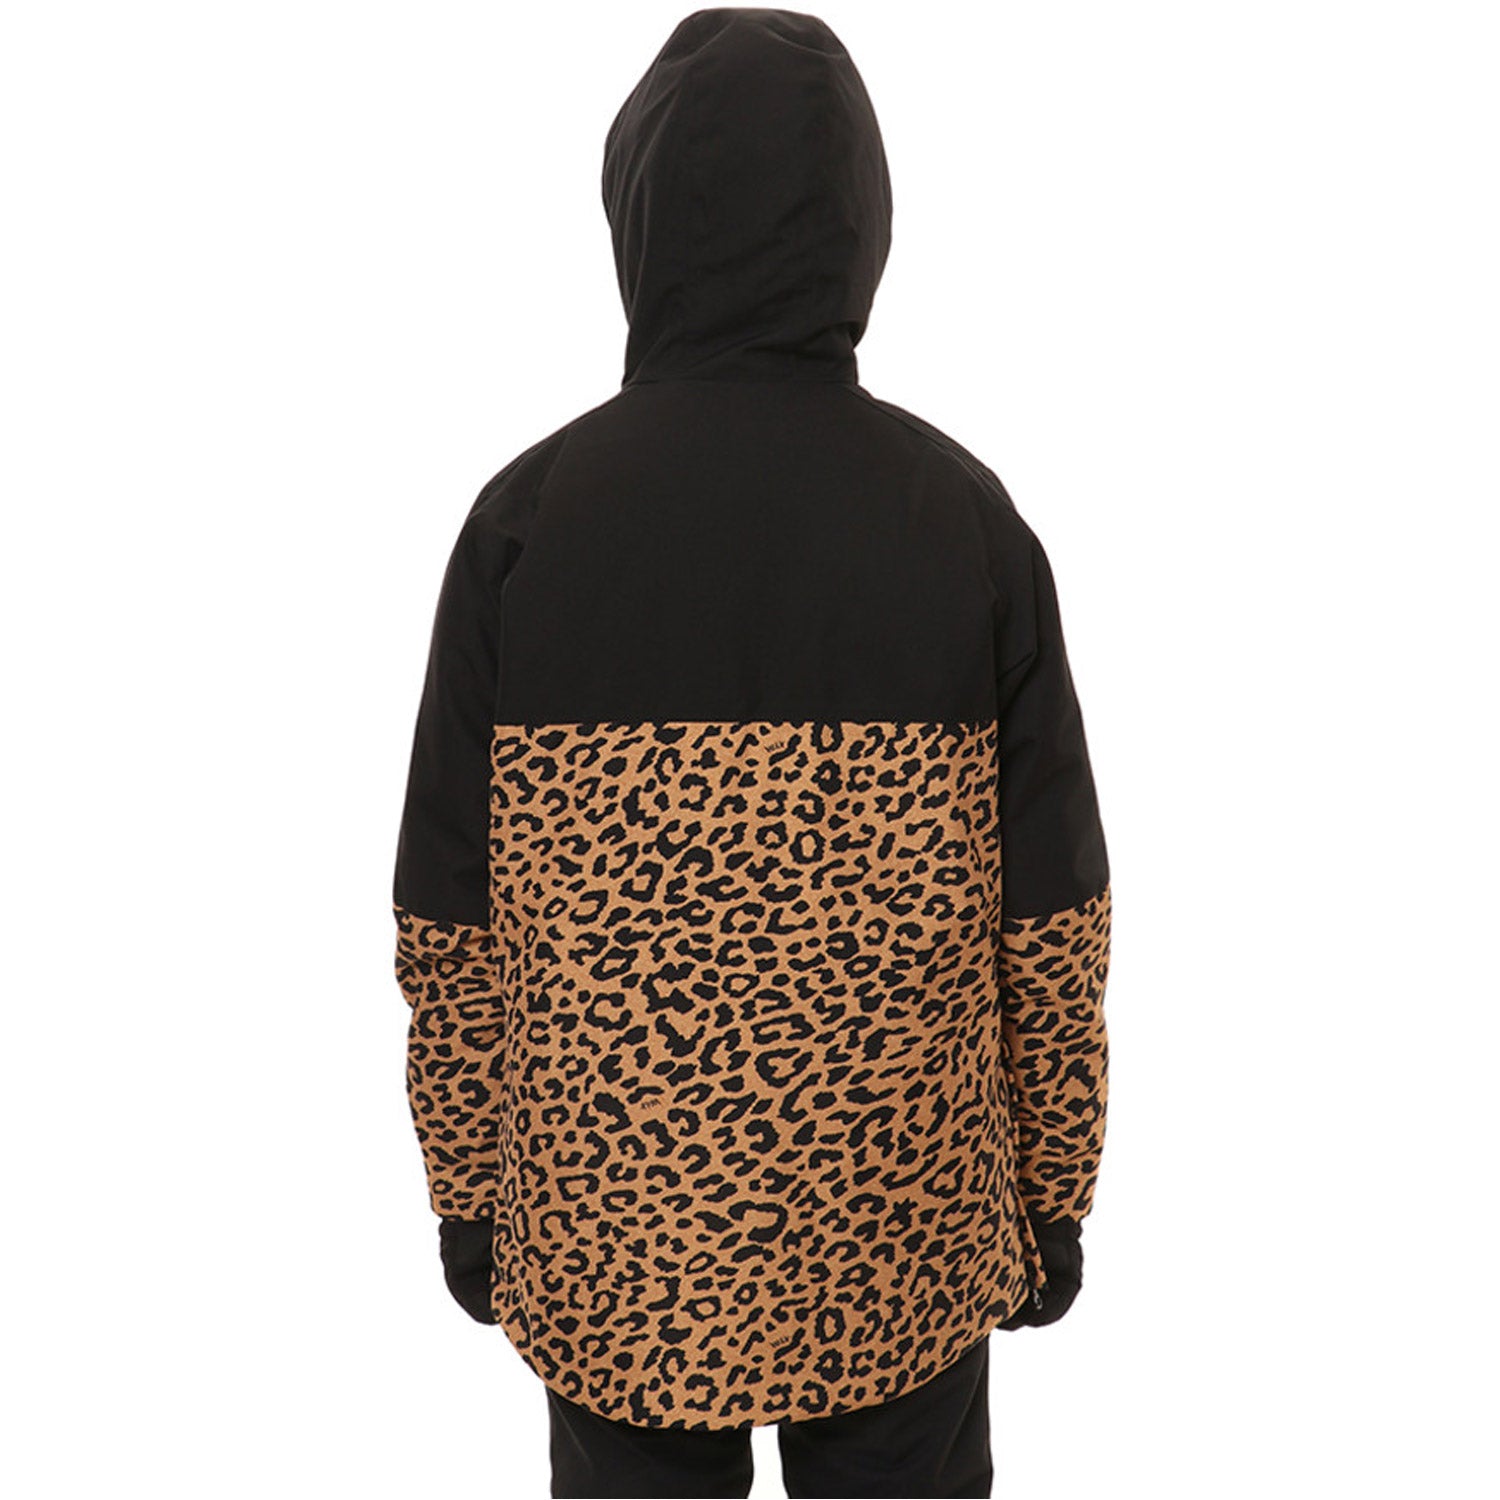 XTM Riley Youth Anorak Snow Jacket Leopard